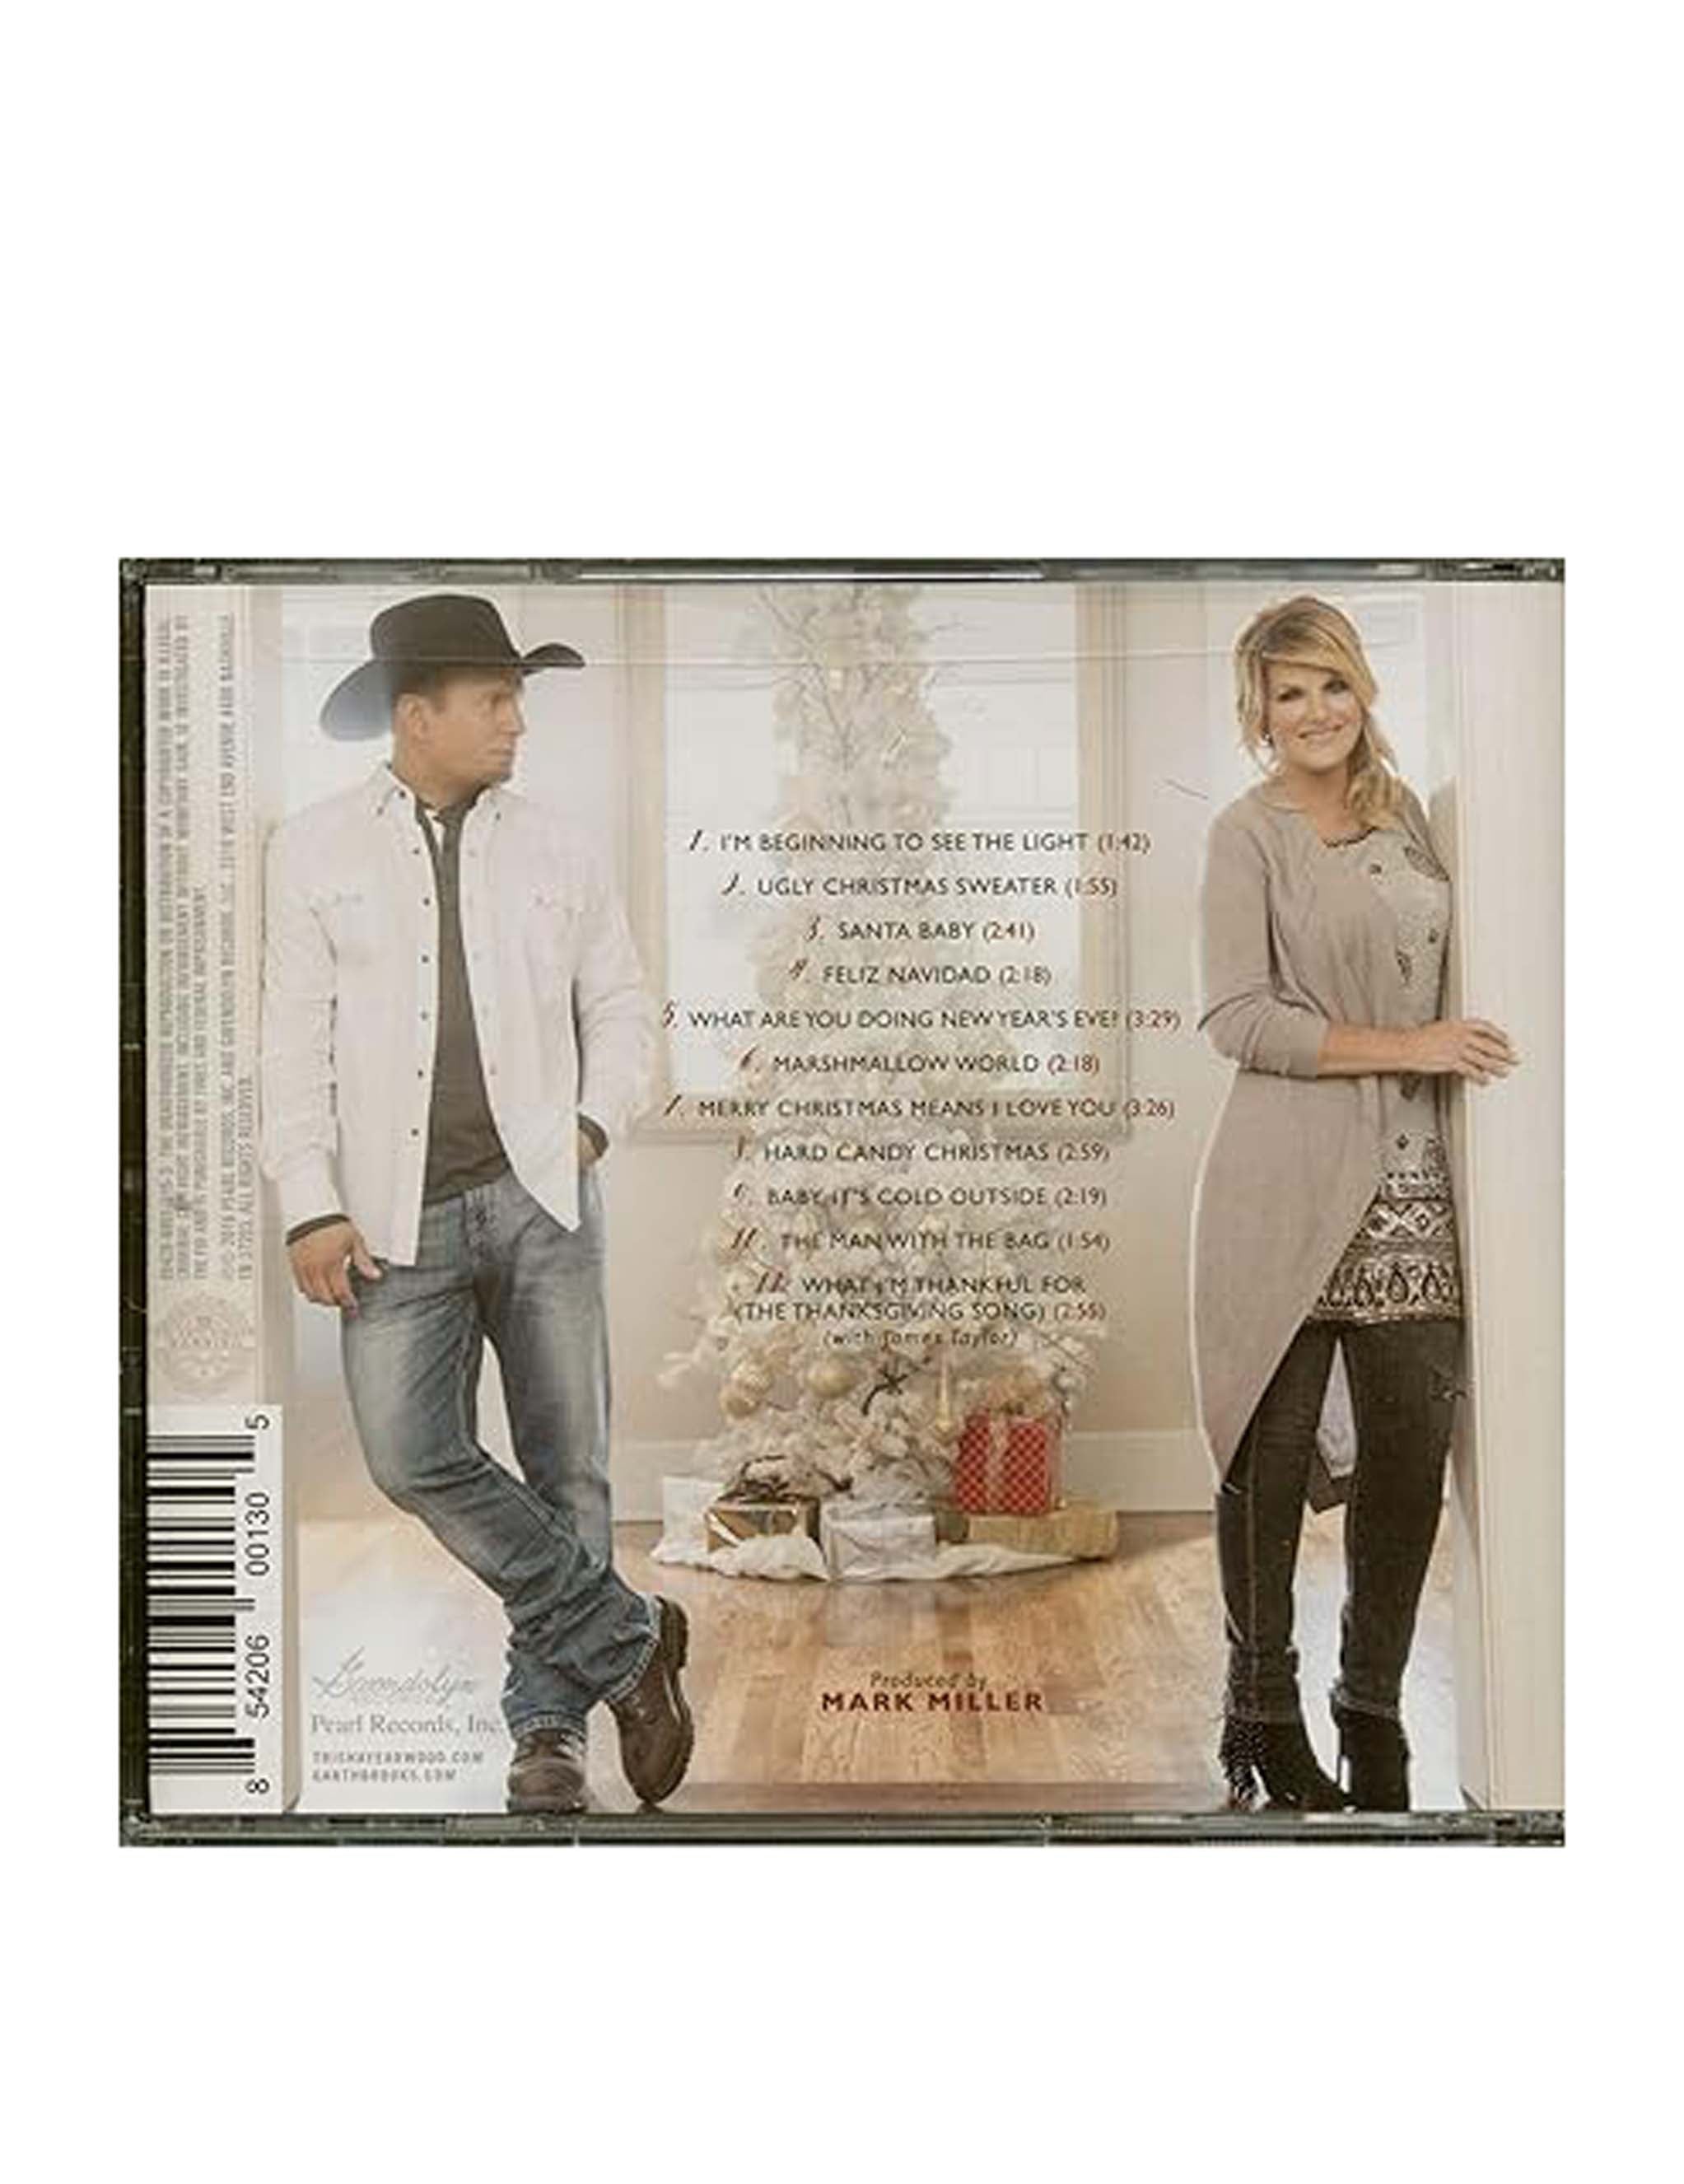 Garth Brooks & Trisha Yearwood: It's Christmas Together (CD)